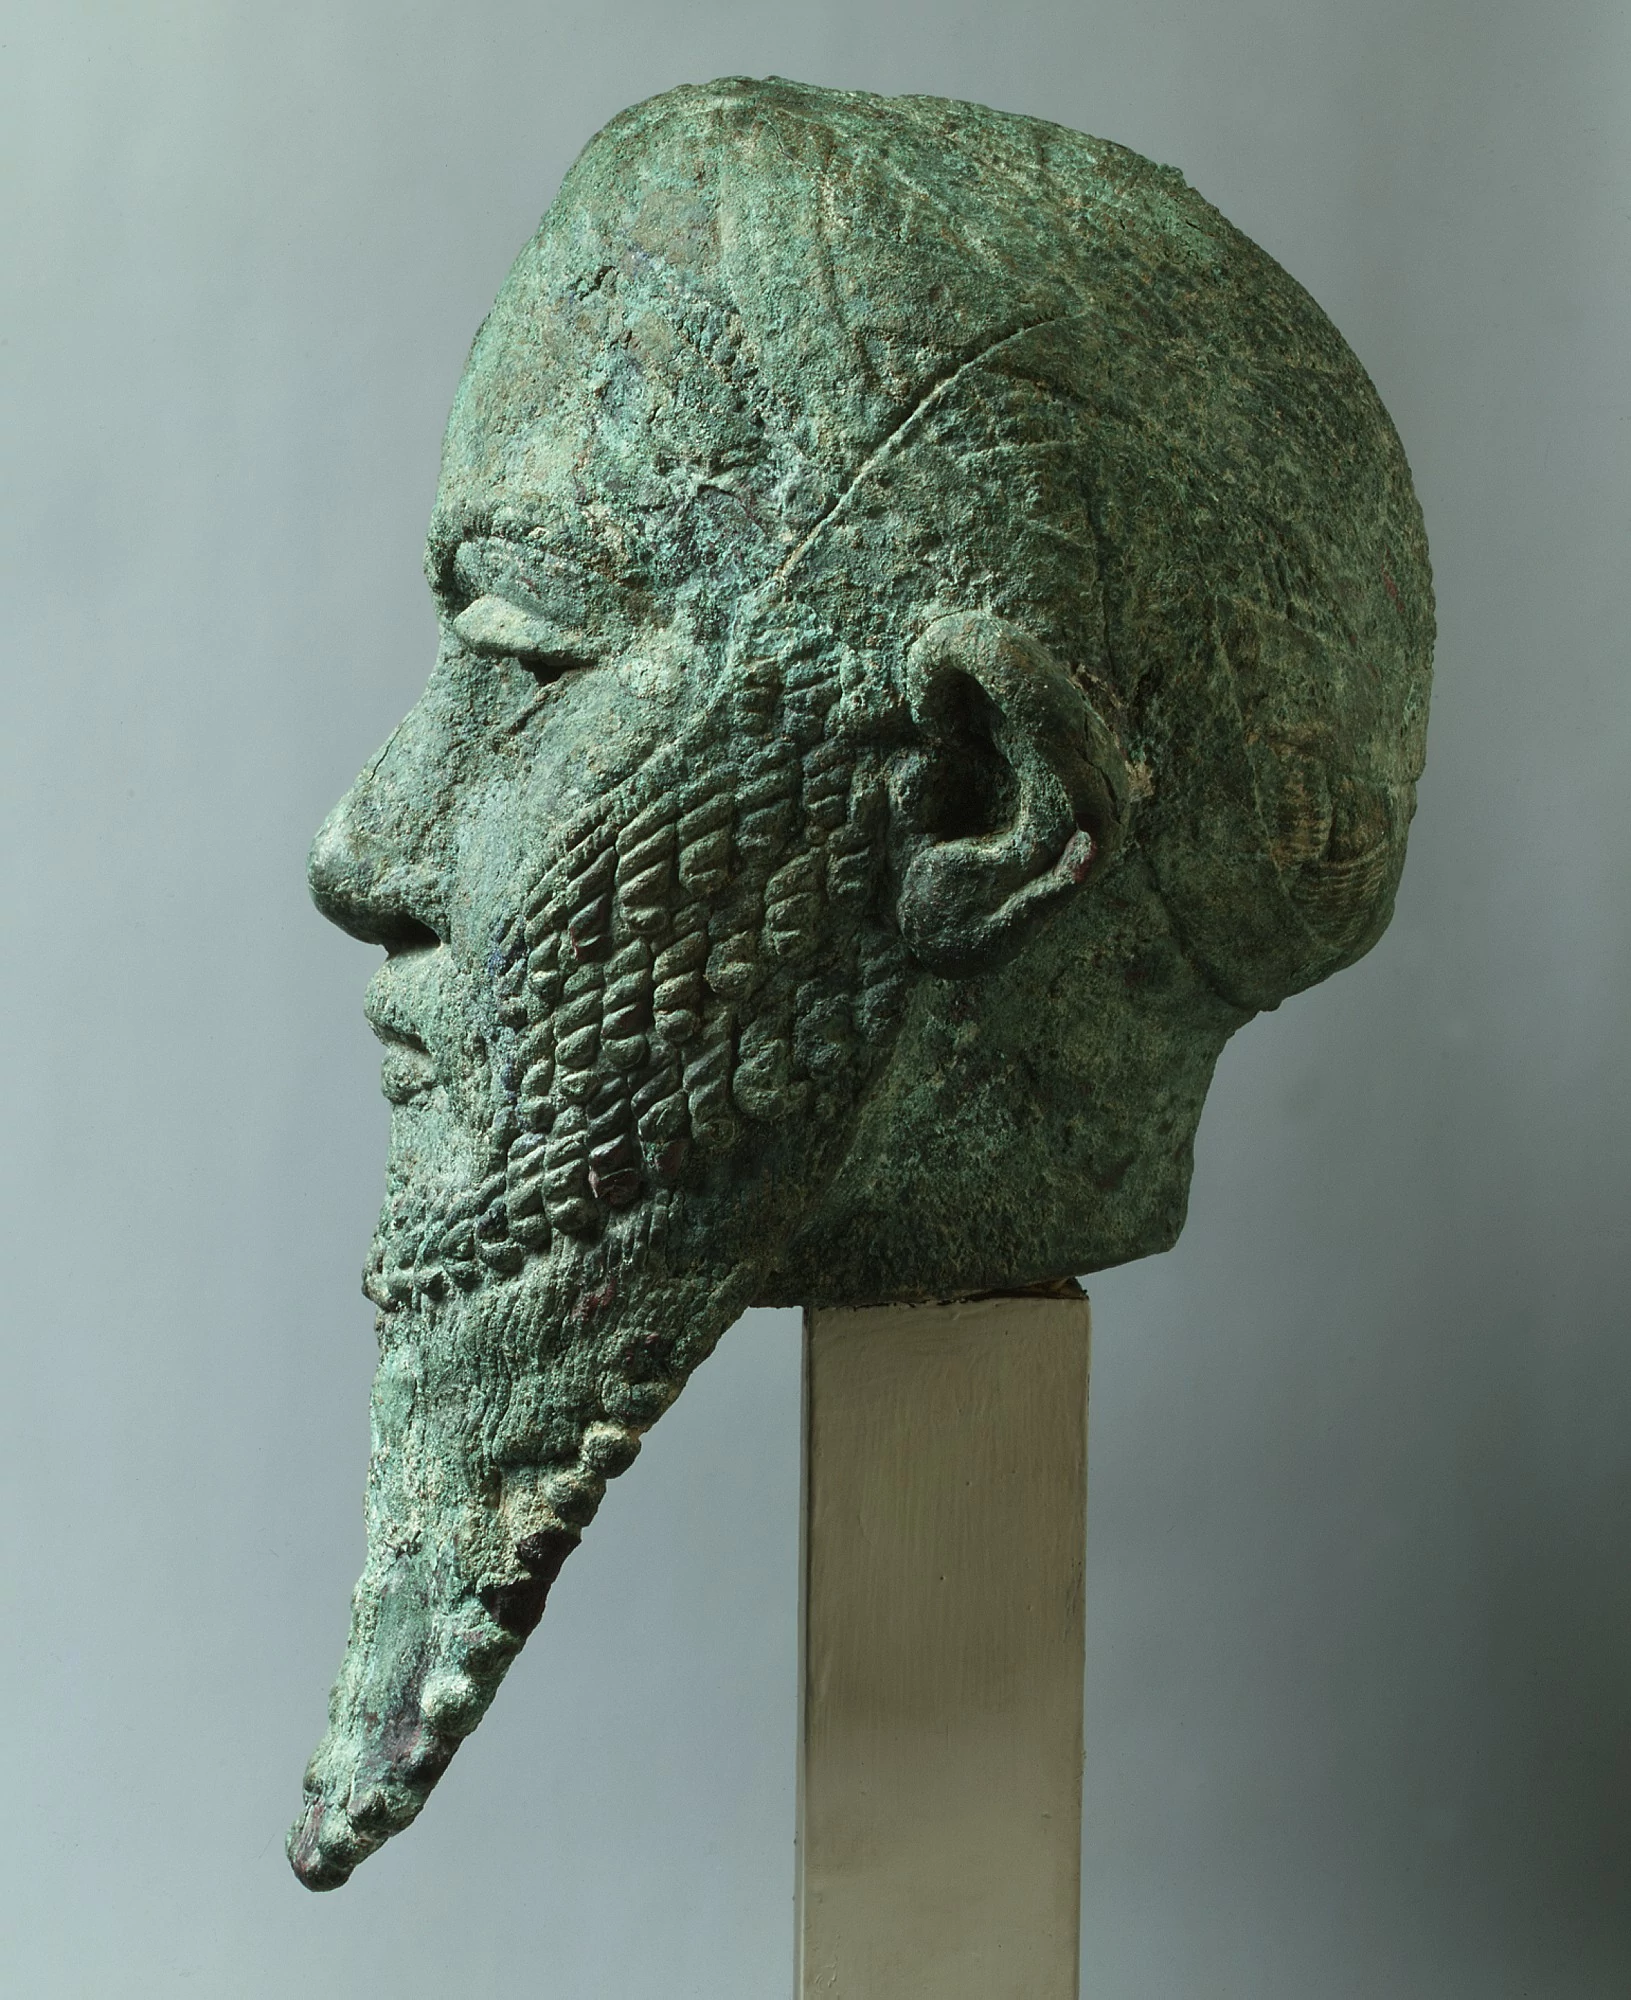 Head of a Ruler, Mesopotamia